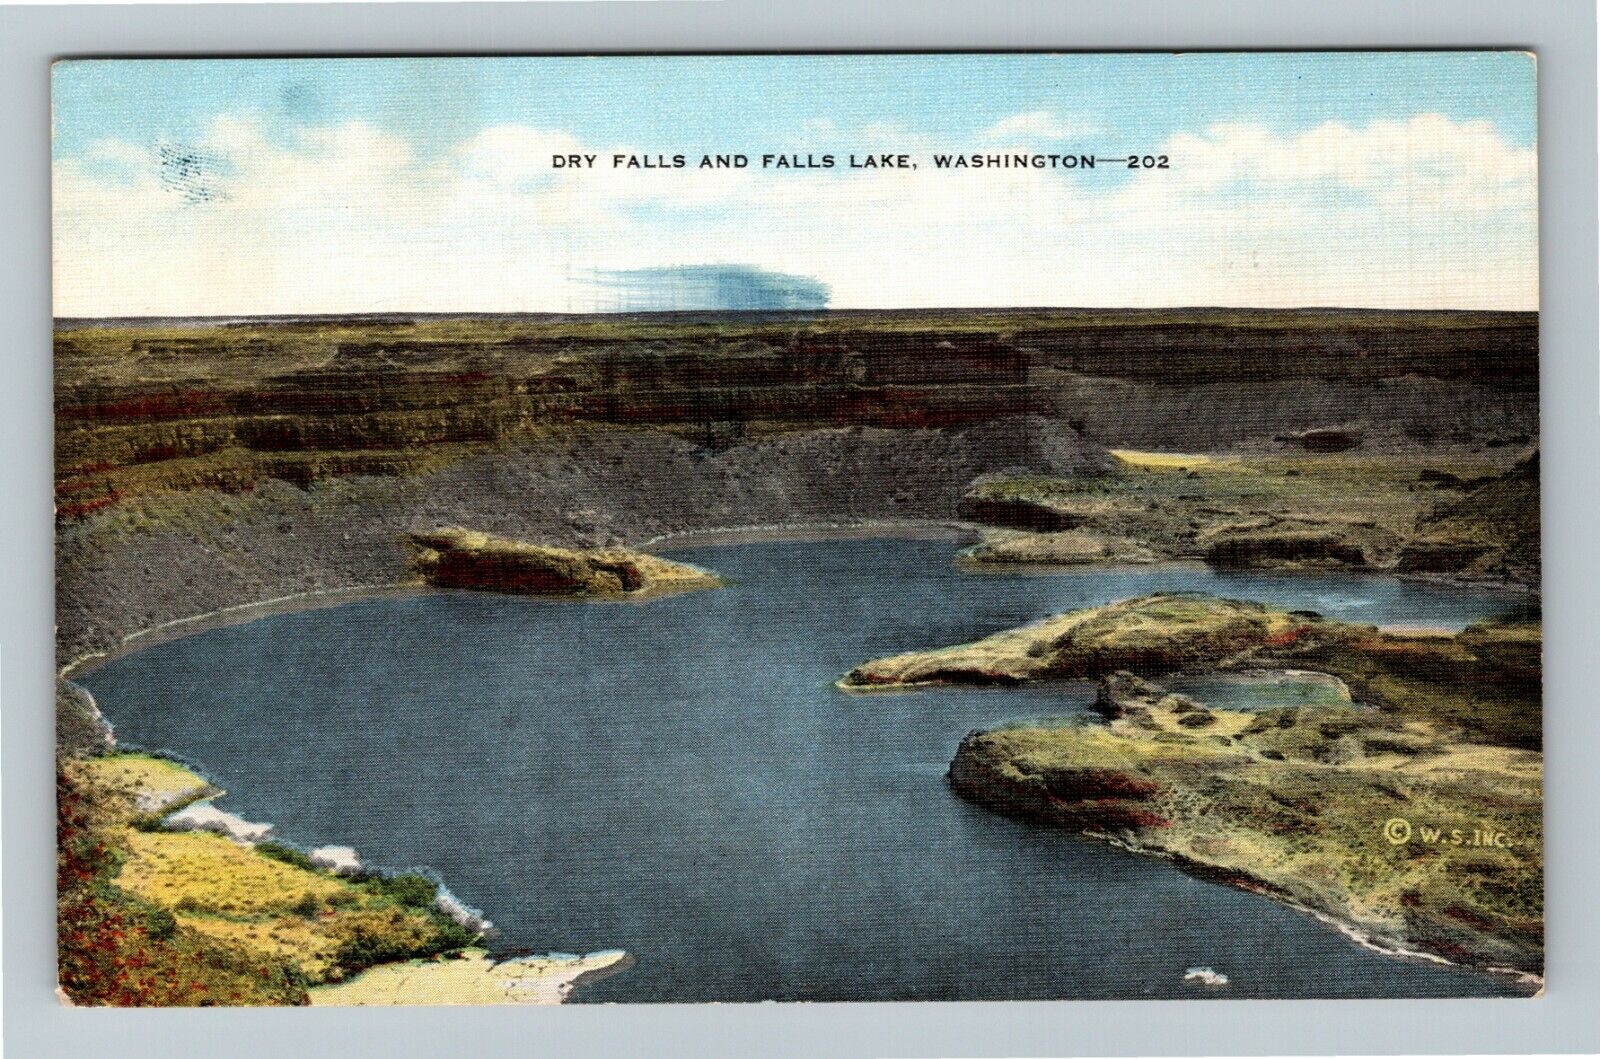 WA-Washington, Dry Falls And Falls Lake, Aerial View, Vintage Postcard